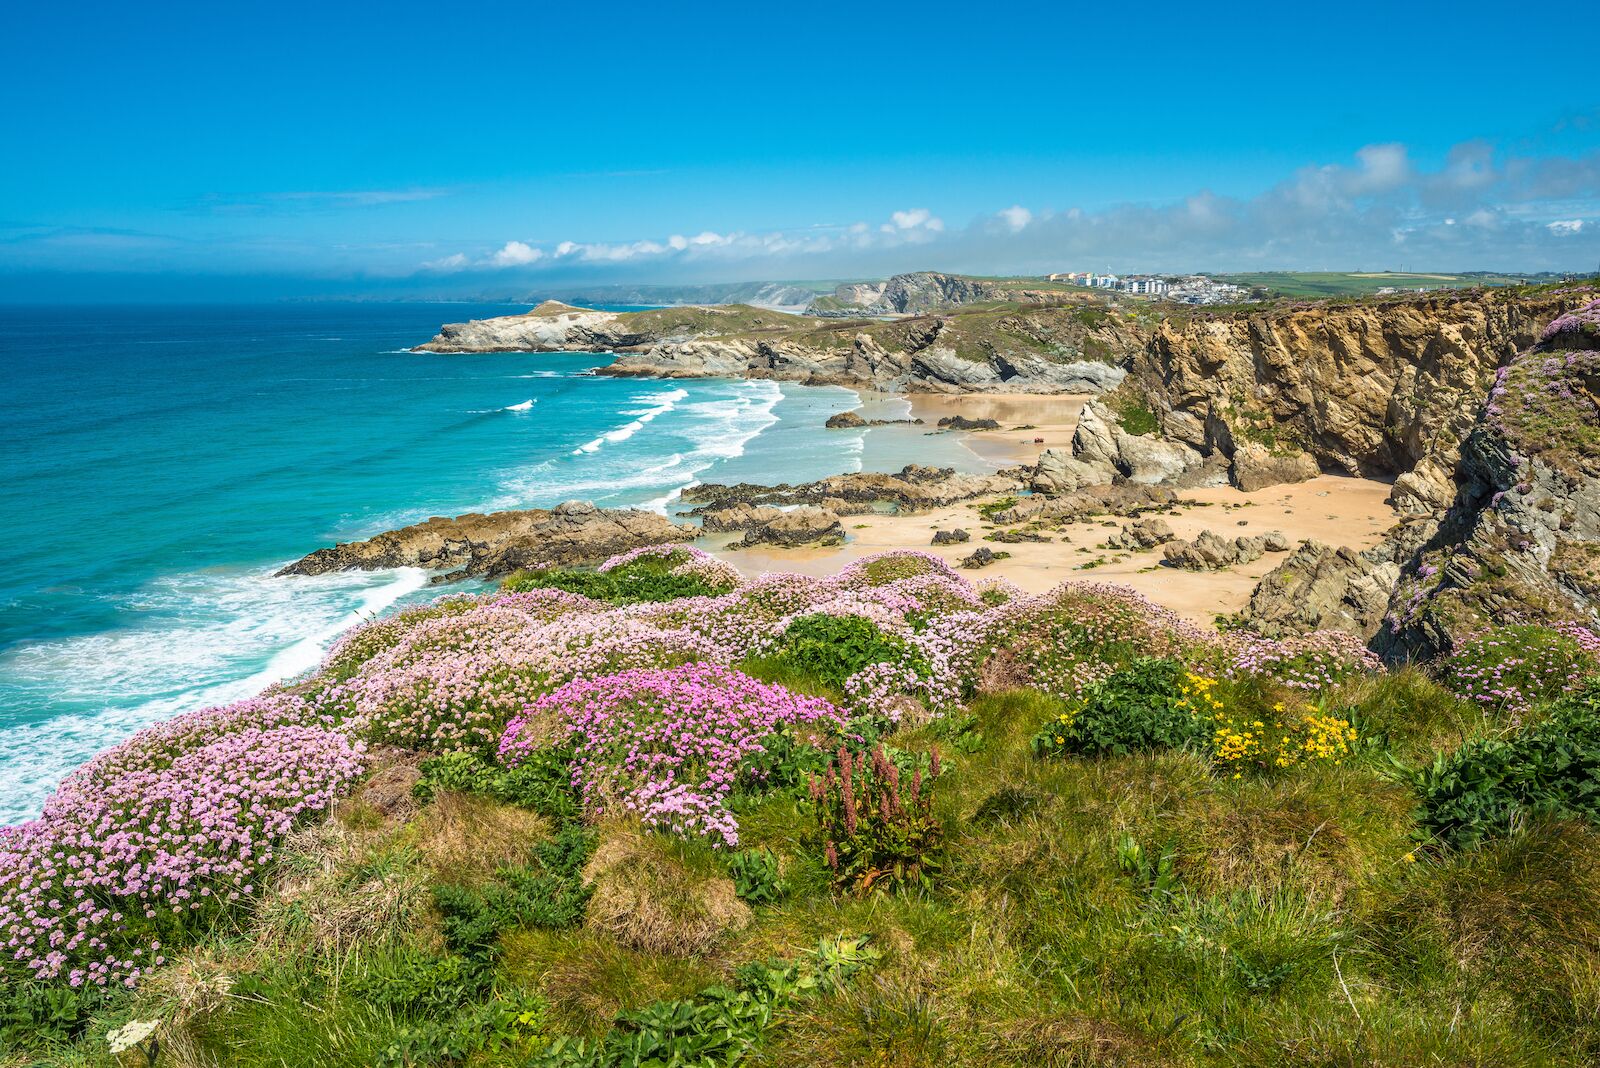 Coastal scenery in Cornwall, England